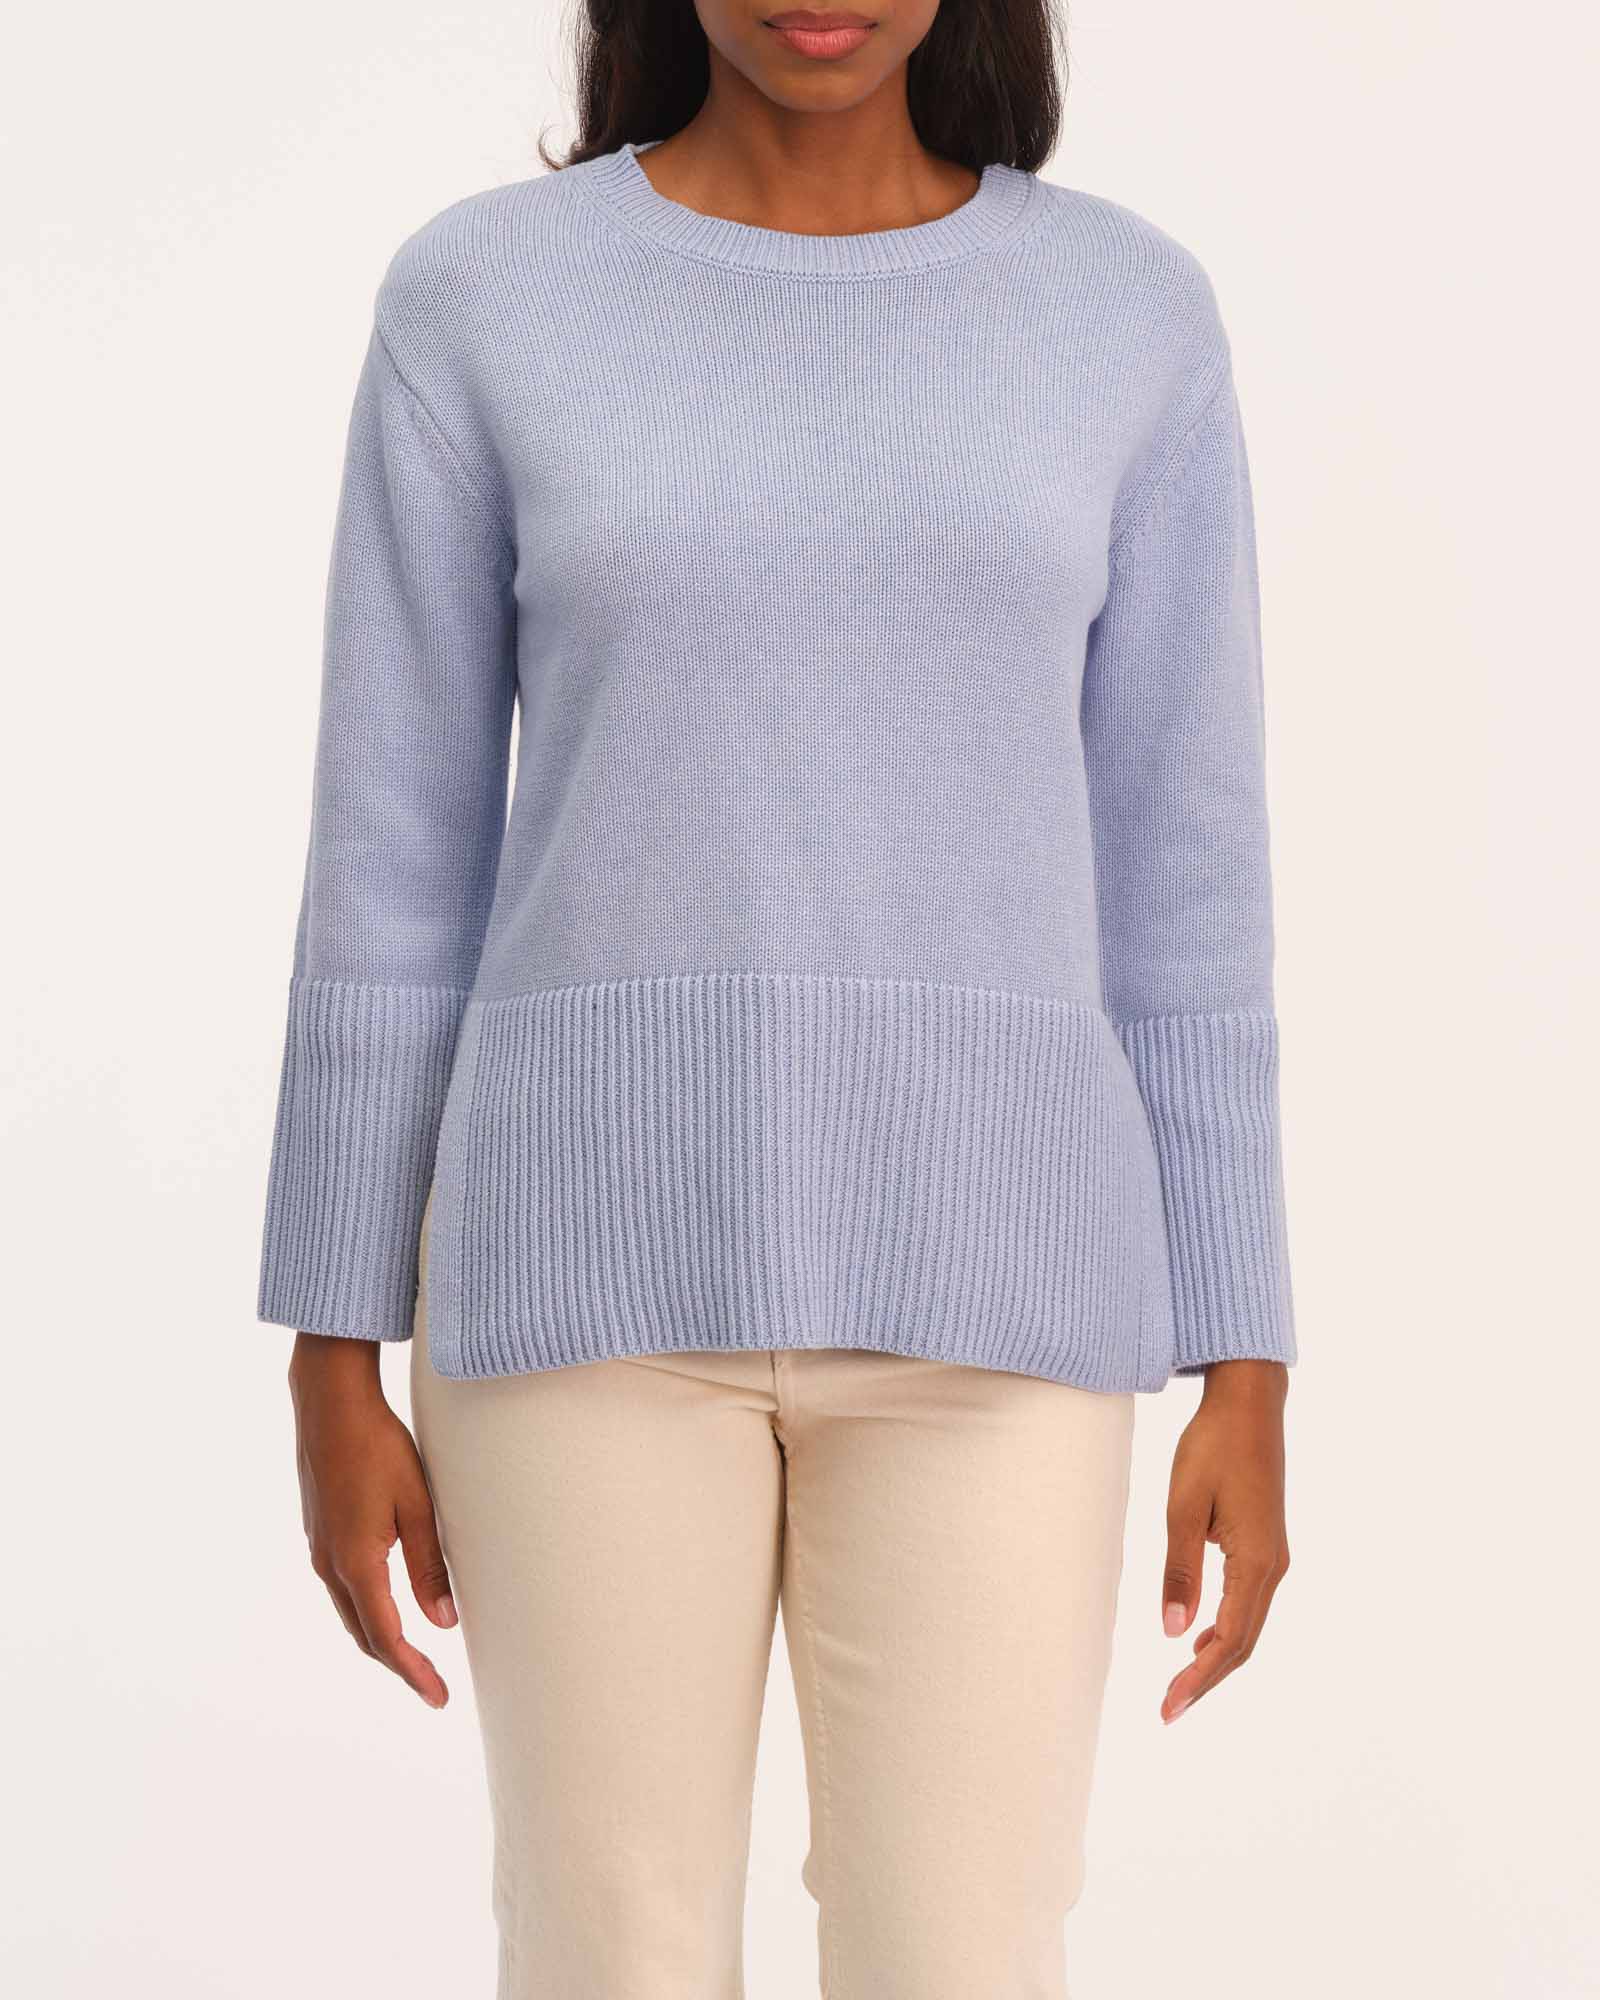 zenana Kristin Pocket Sweater Top in Black - Marlee Janes